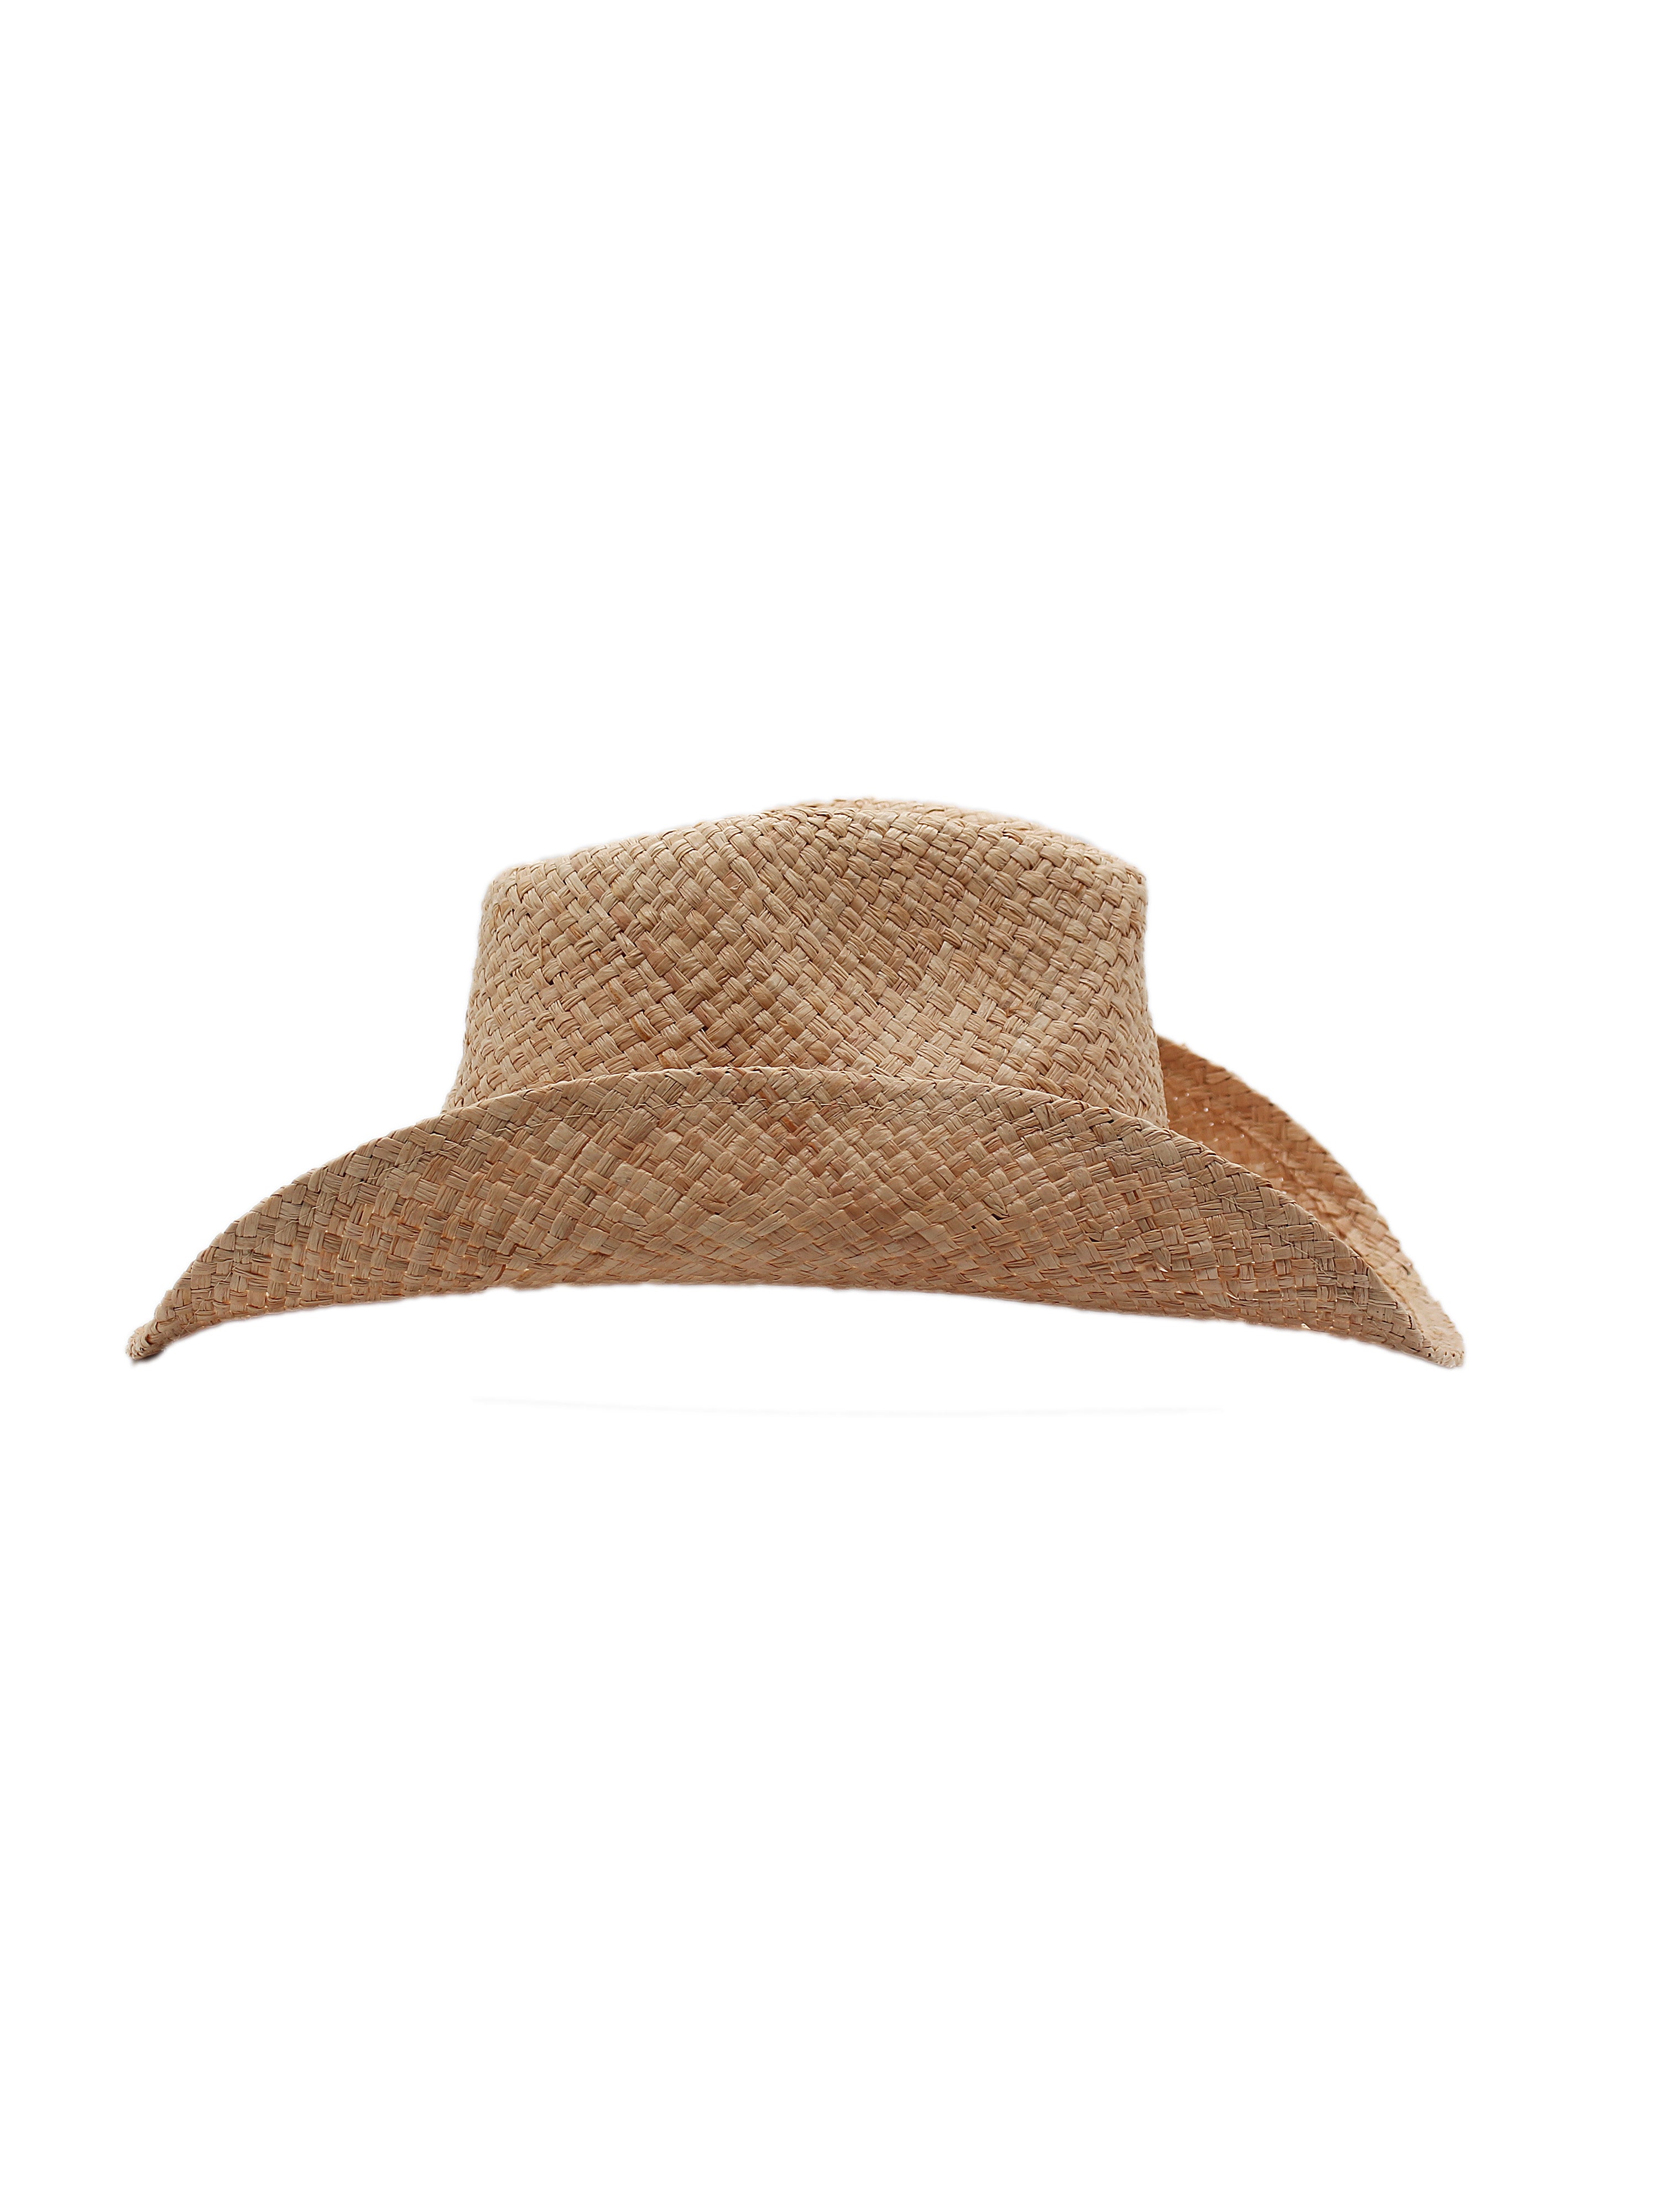 Silver Canyon Men&#39;s Winslow Raffia Straw Western Cowboy Summer Sun Hat - Natural